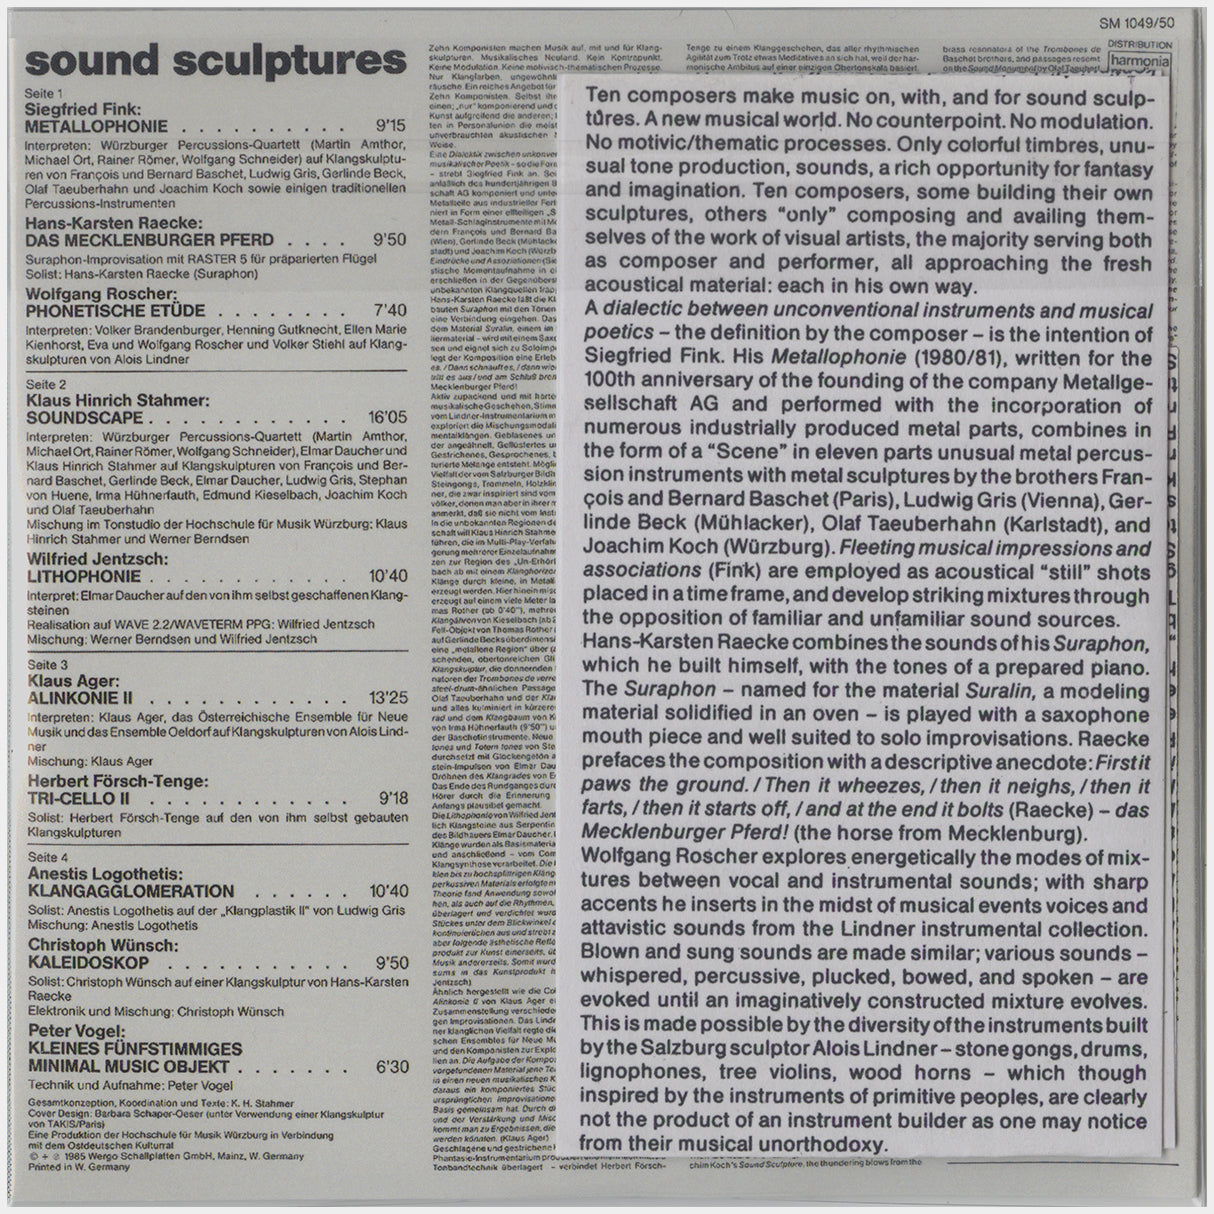 [CP 000.39 CD] Sound Sculptures